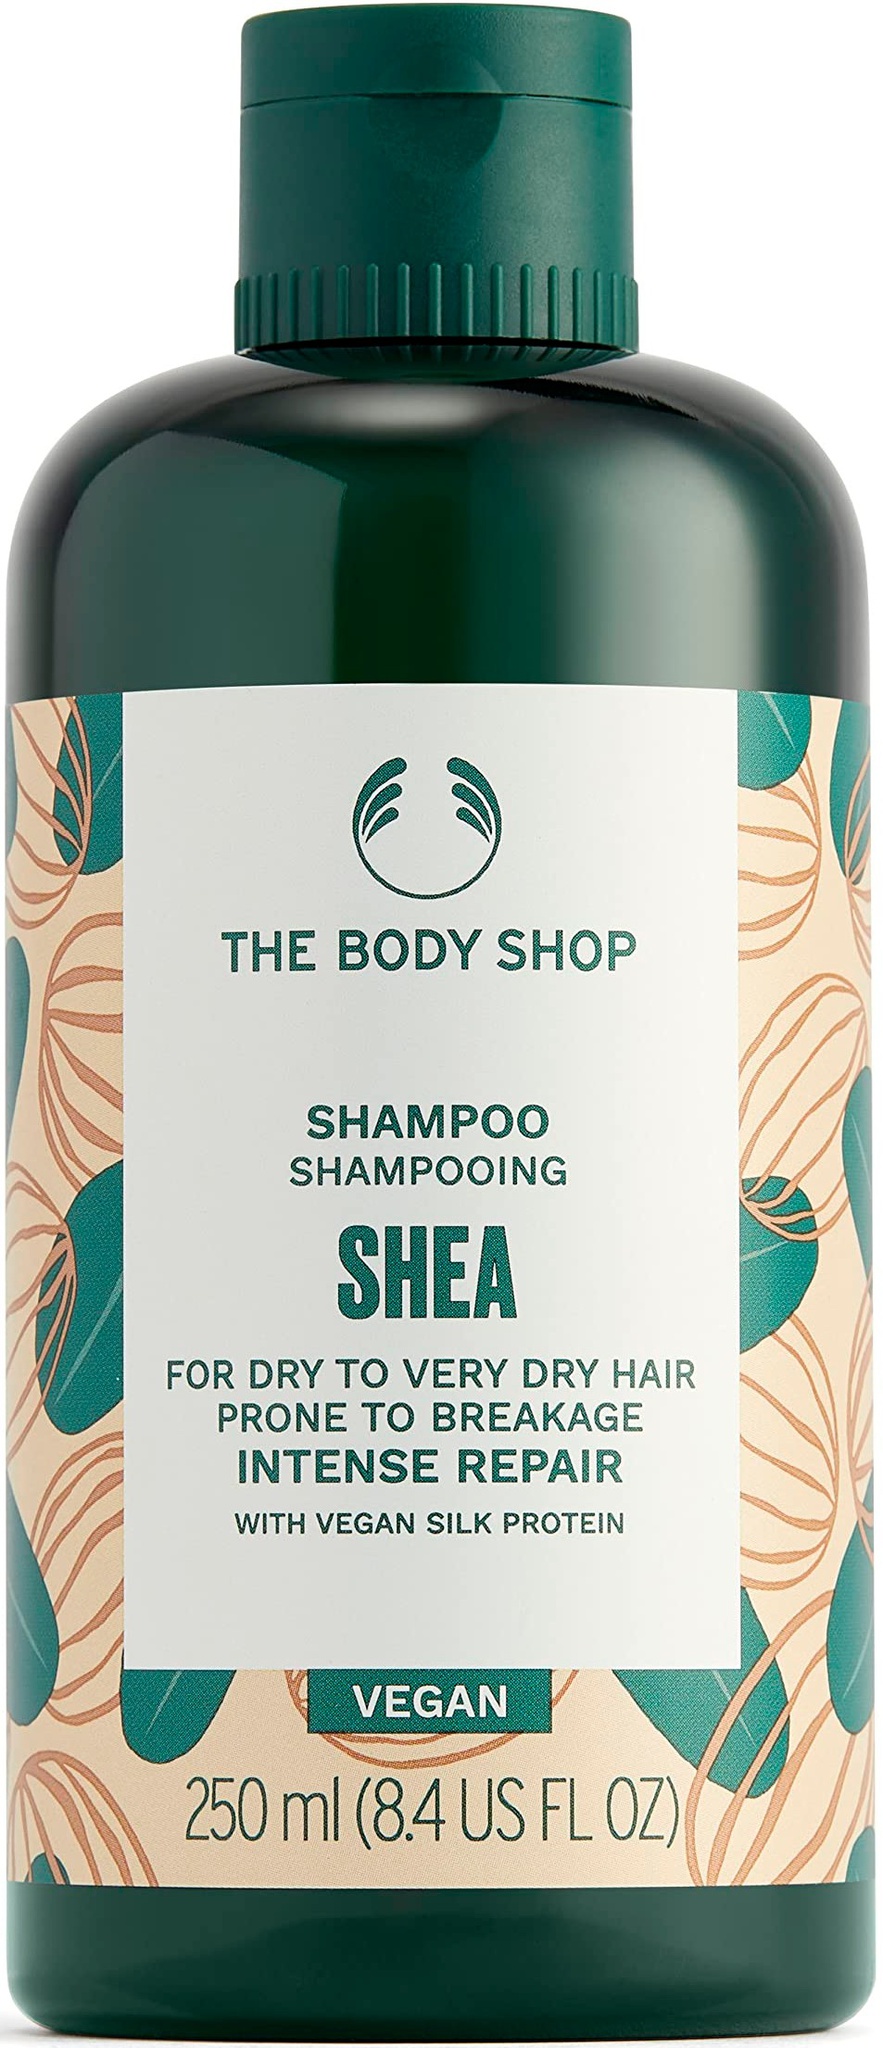 The Body Shop Shea Intense Repair Shampoo